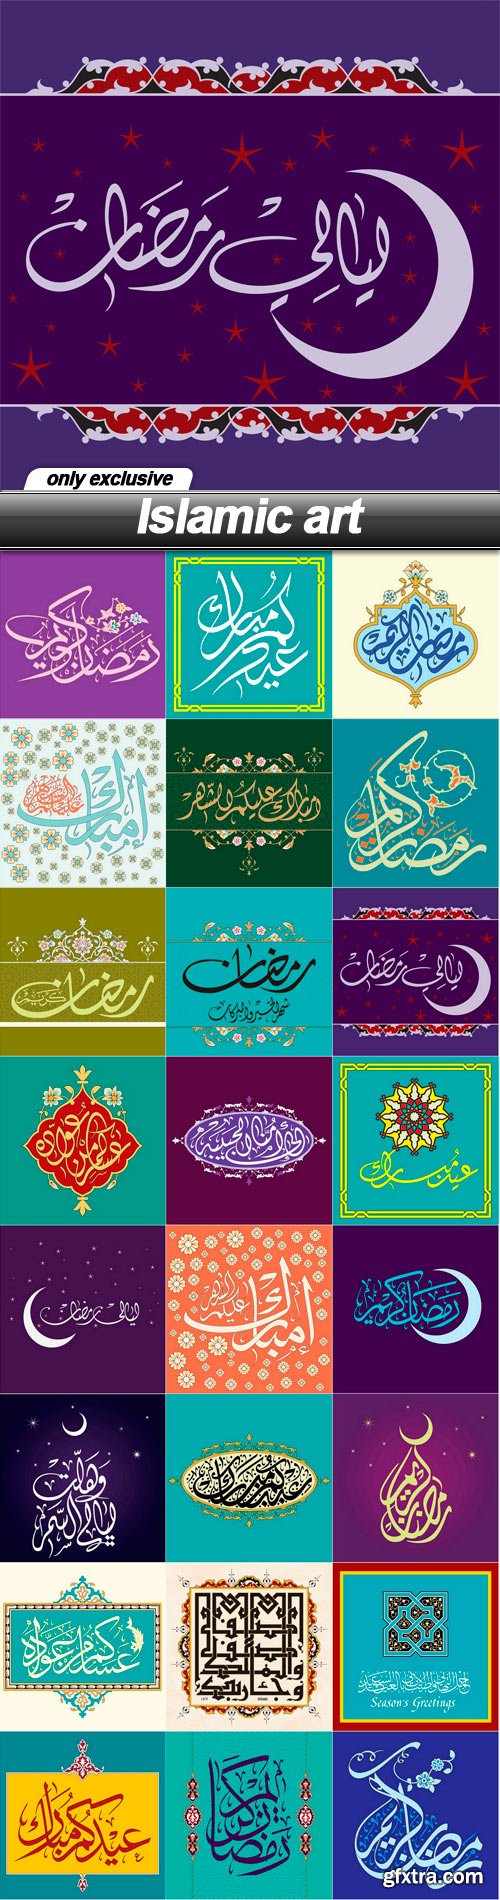 Islamic art - 24 EPS